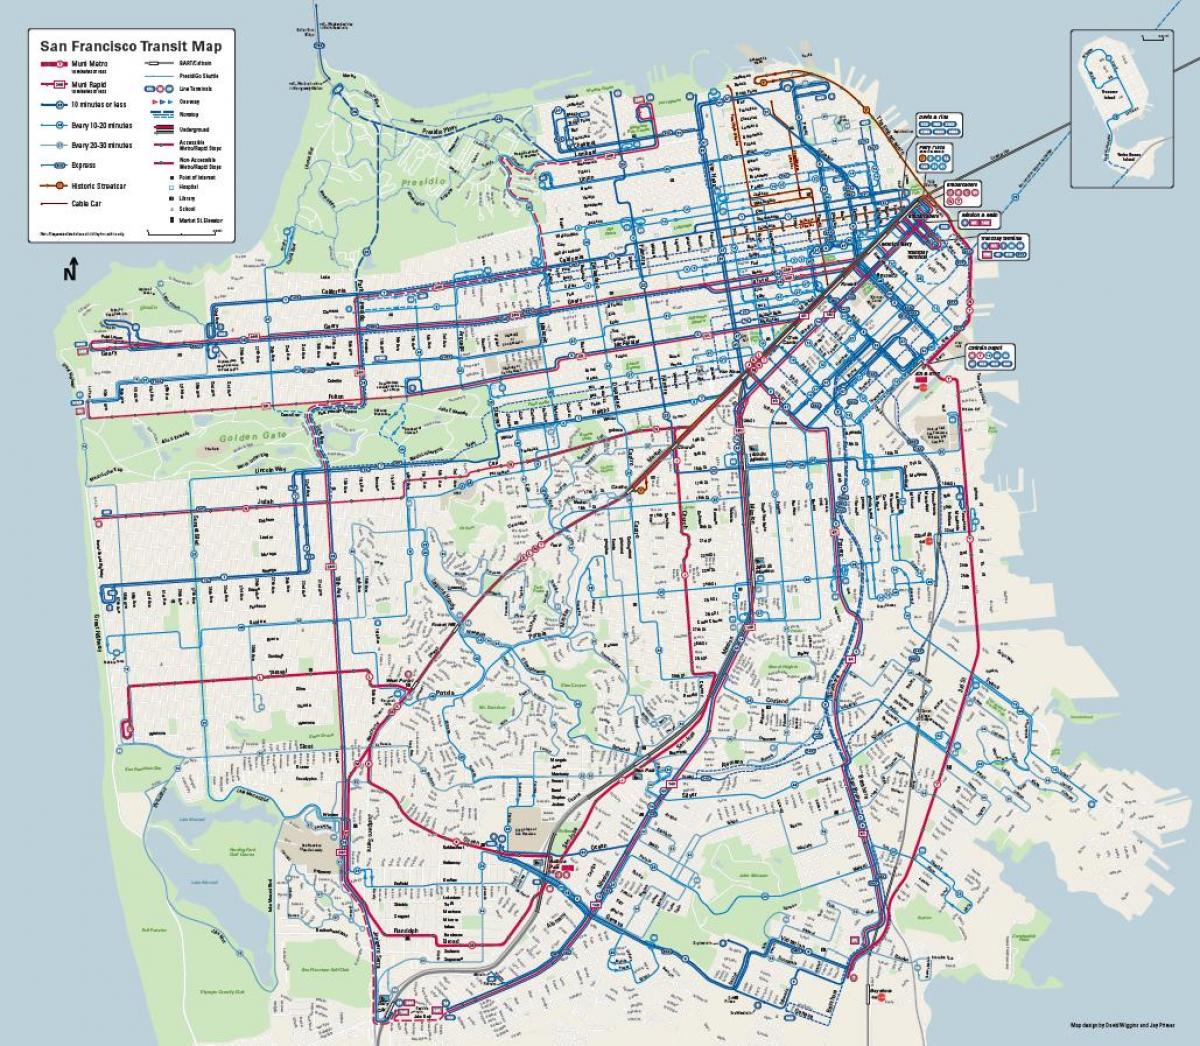 SF bus map - San Francisco bus system map (California - USA)